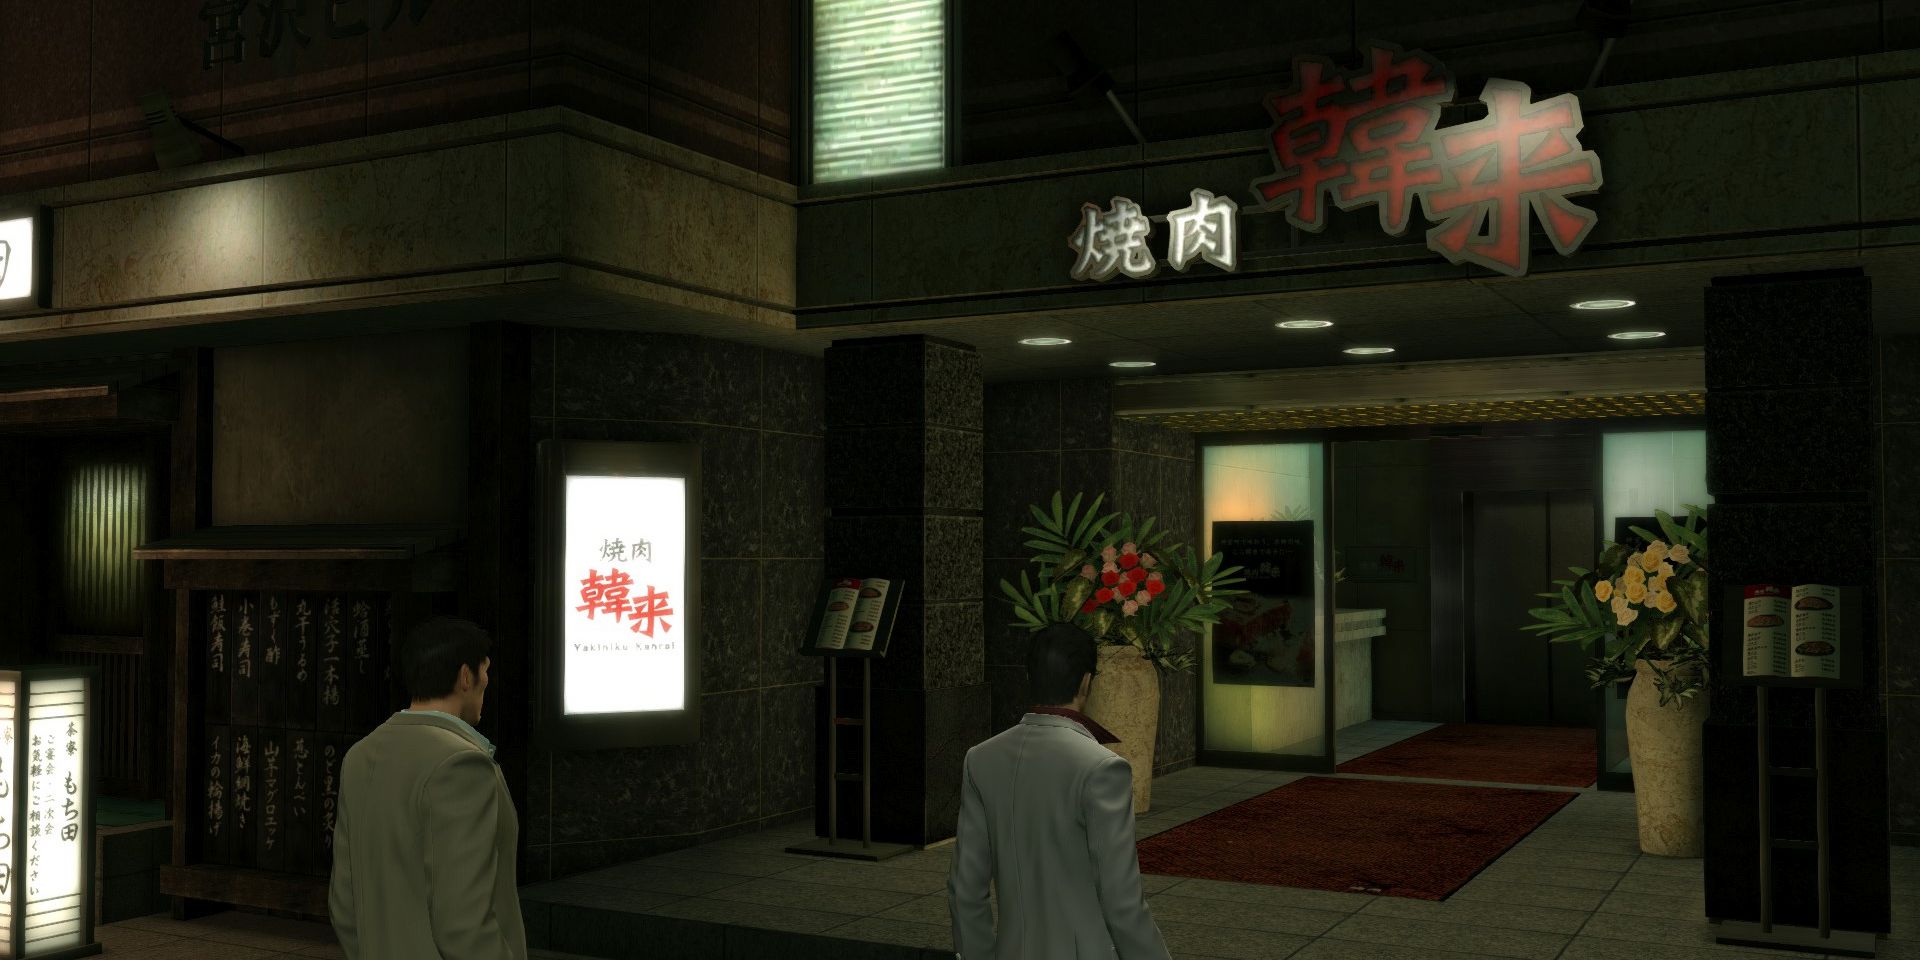 Kiryu outside Kanrai at night in a screenshot from the Yakuza series.